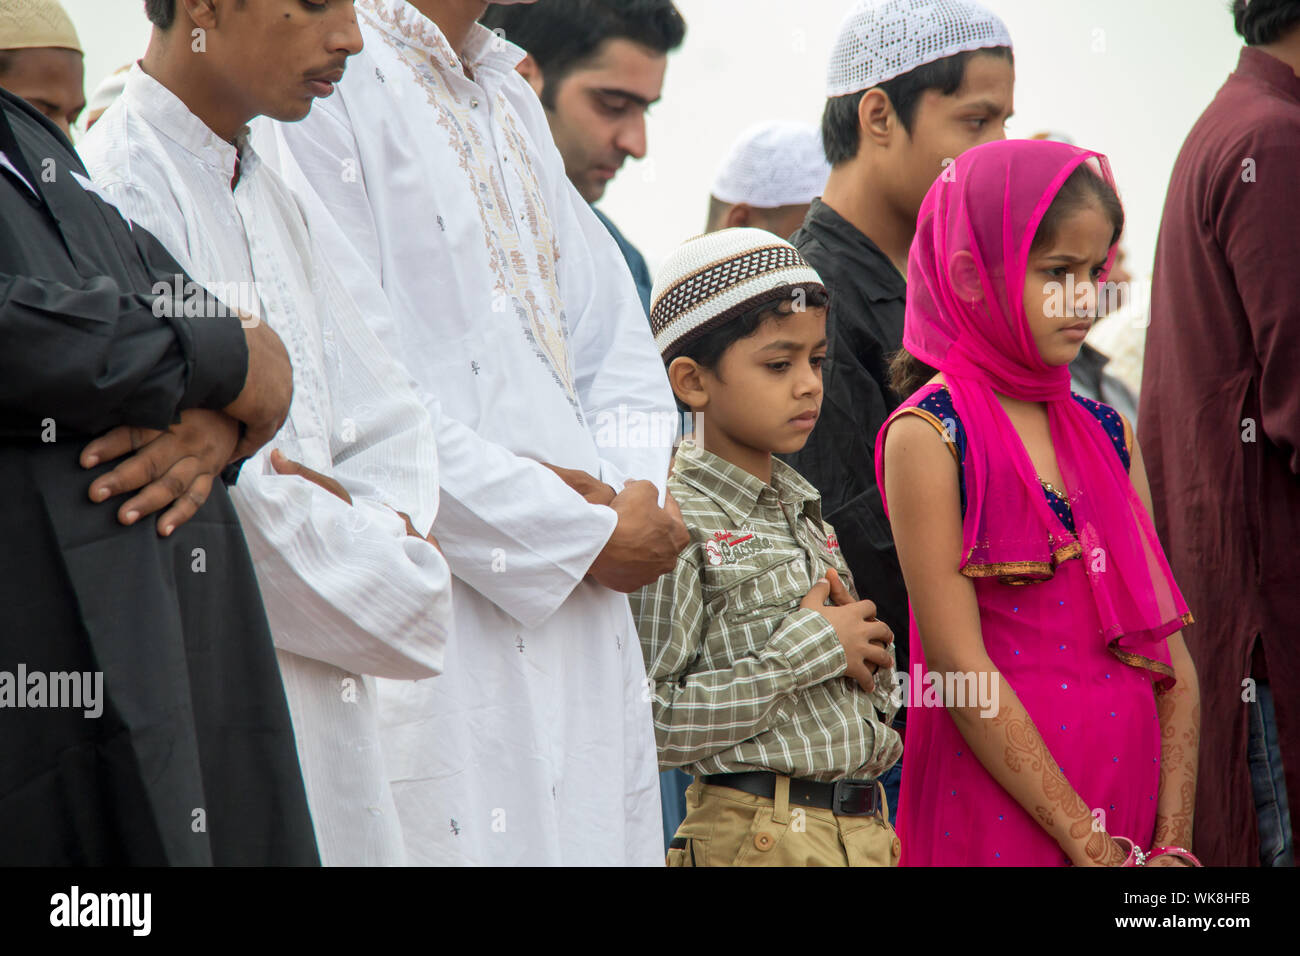 Group of people praying Namaz at masjid, Jama Masjid, Old Delhi, India Stock Photo